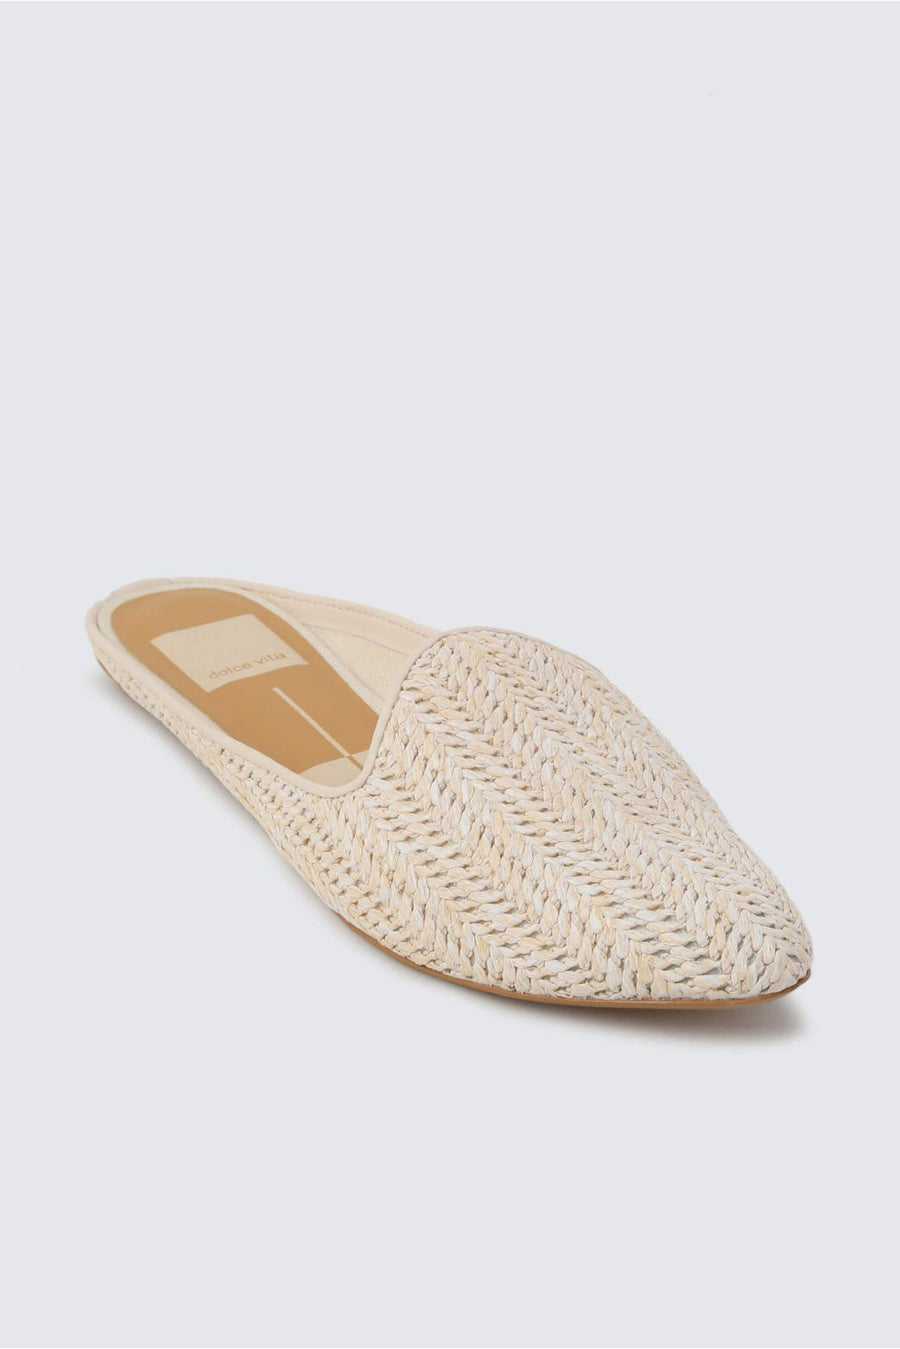 grant natural raffia woven loafer slides